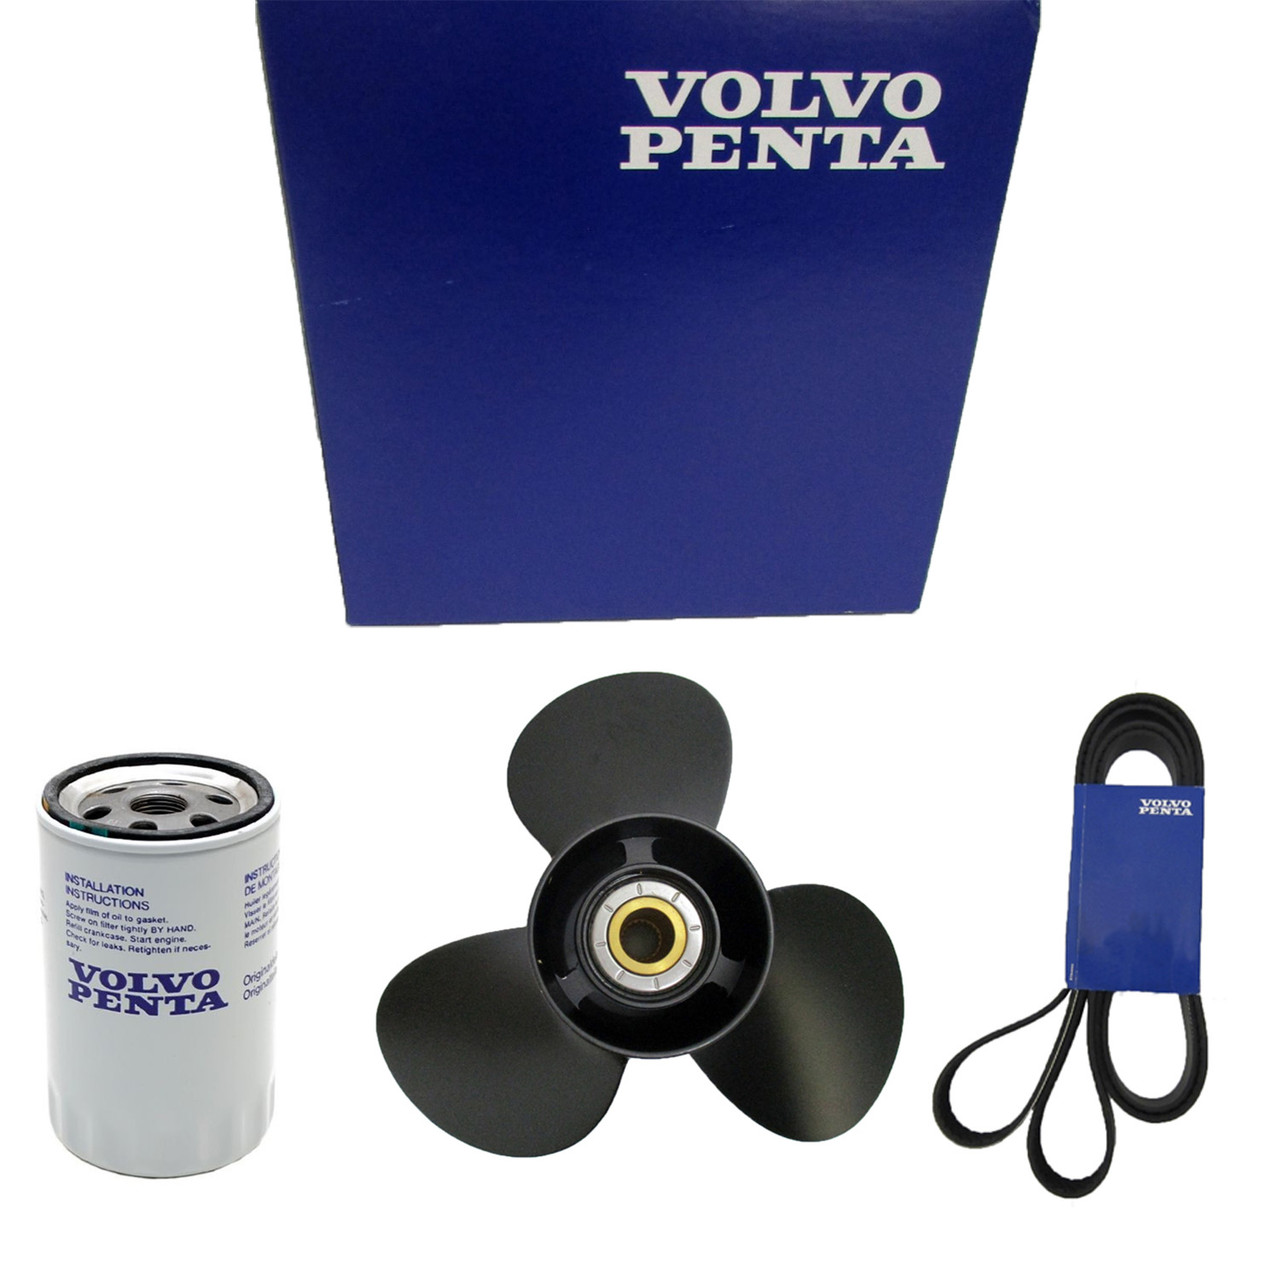 Volvo Penta New OEM Reversing Gear Kit, 23268291